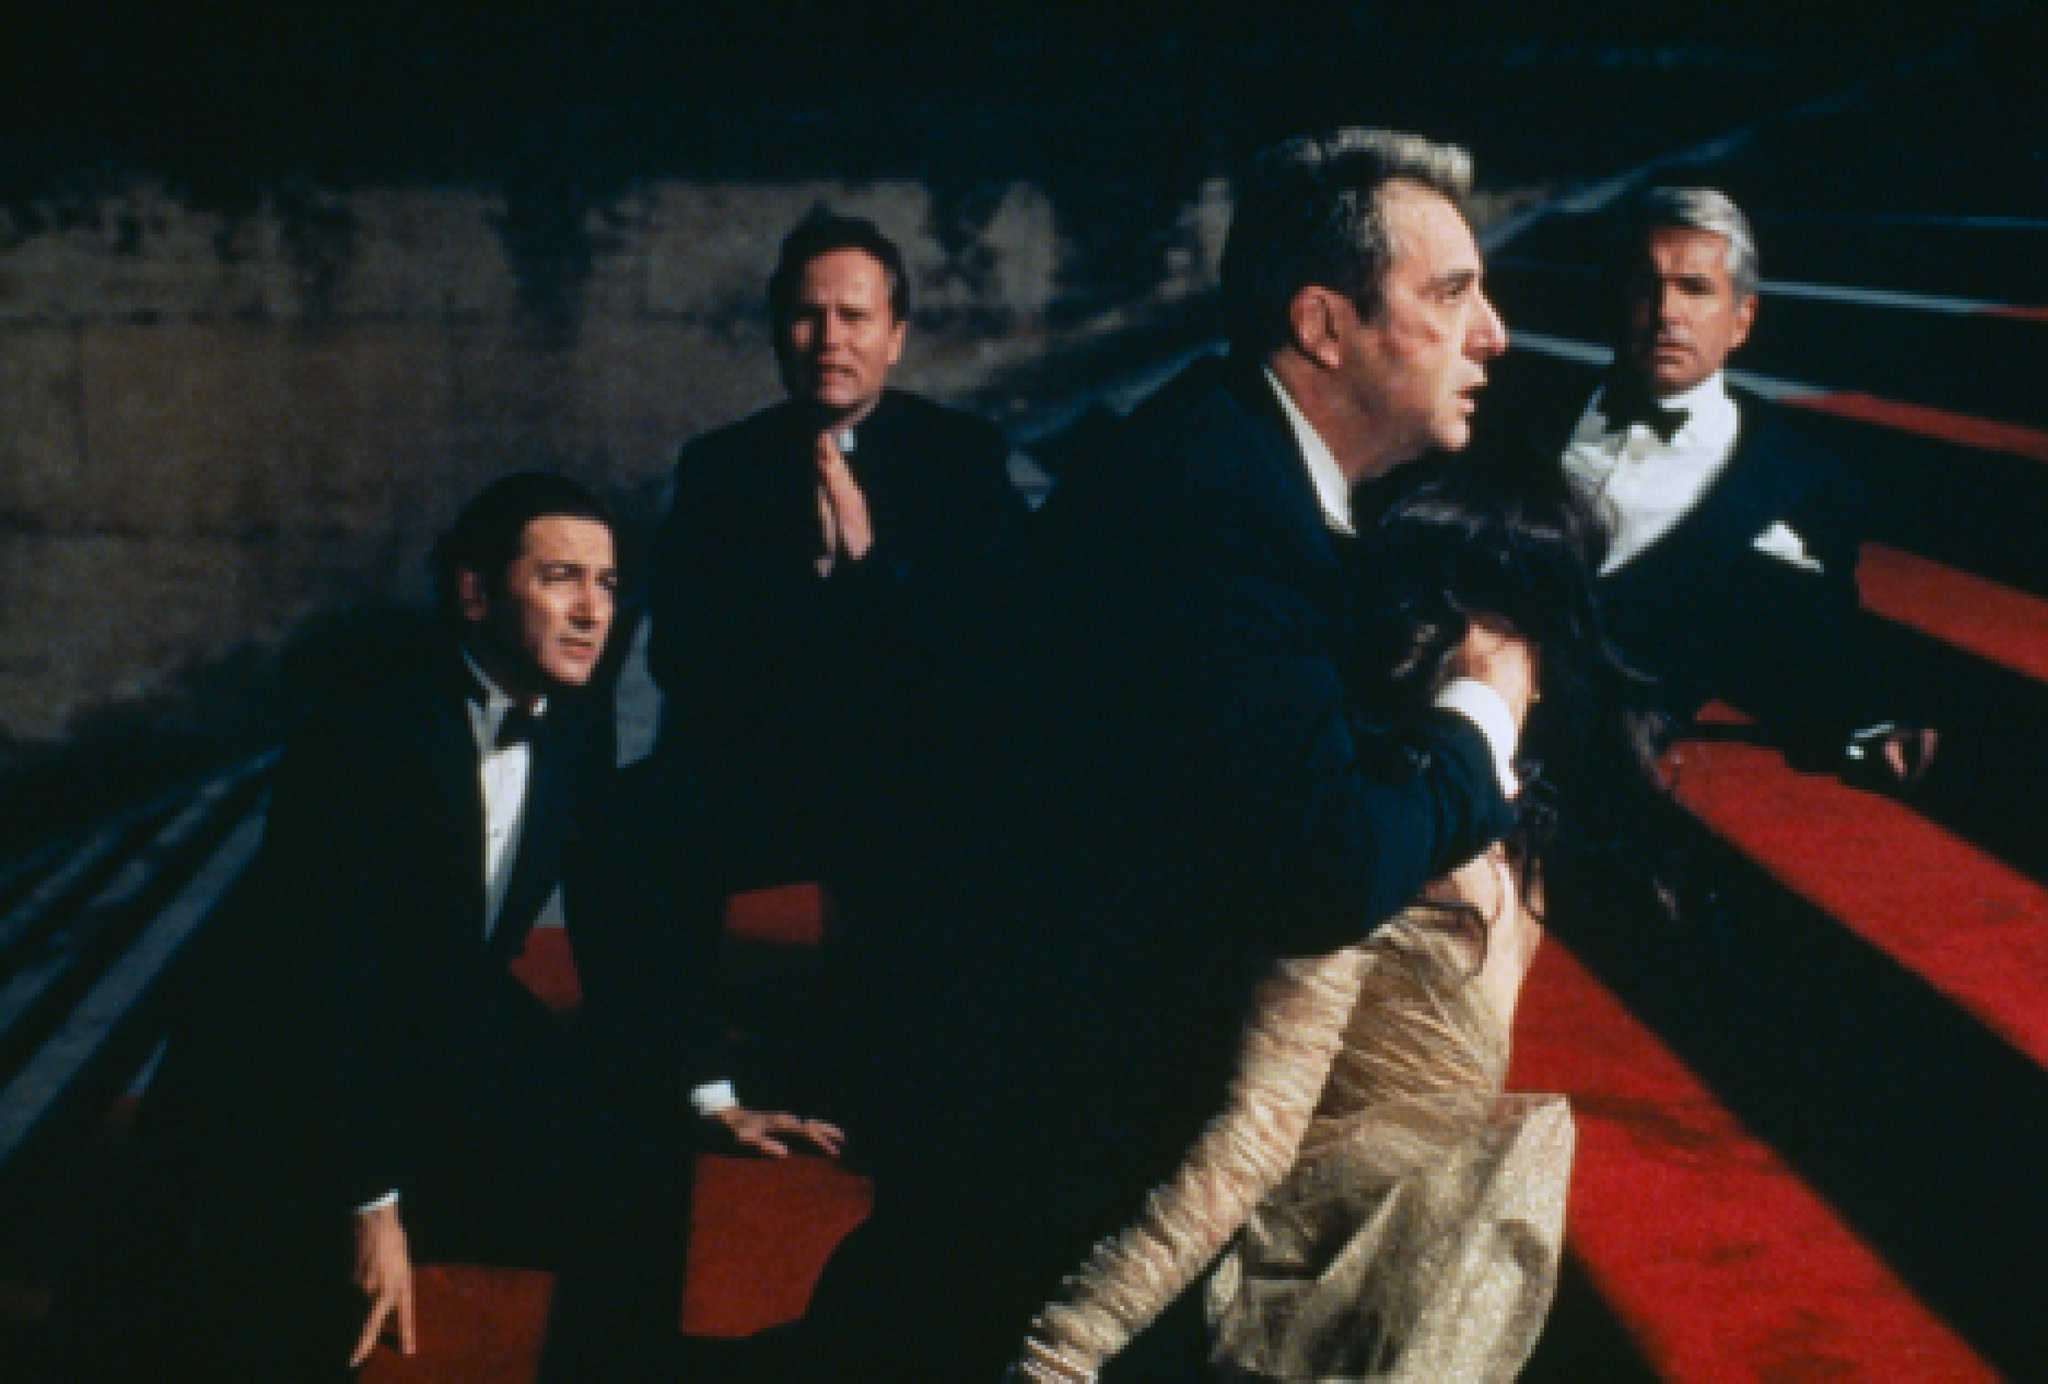 Al Pacino, Sofia Coppola, George Hamilton, John Savage, Franc D'Ambrosio, and Don Novello in The Godfather Part III (1990)